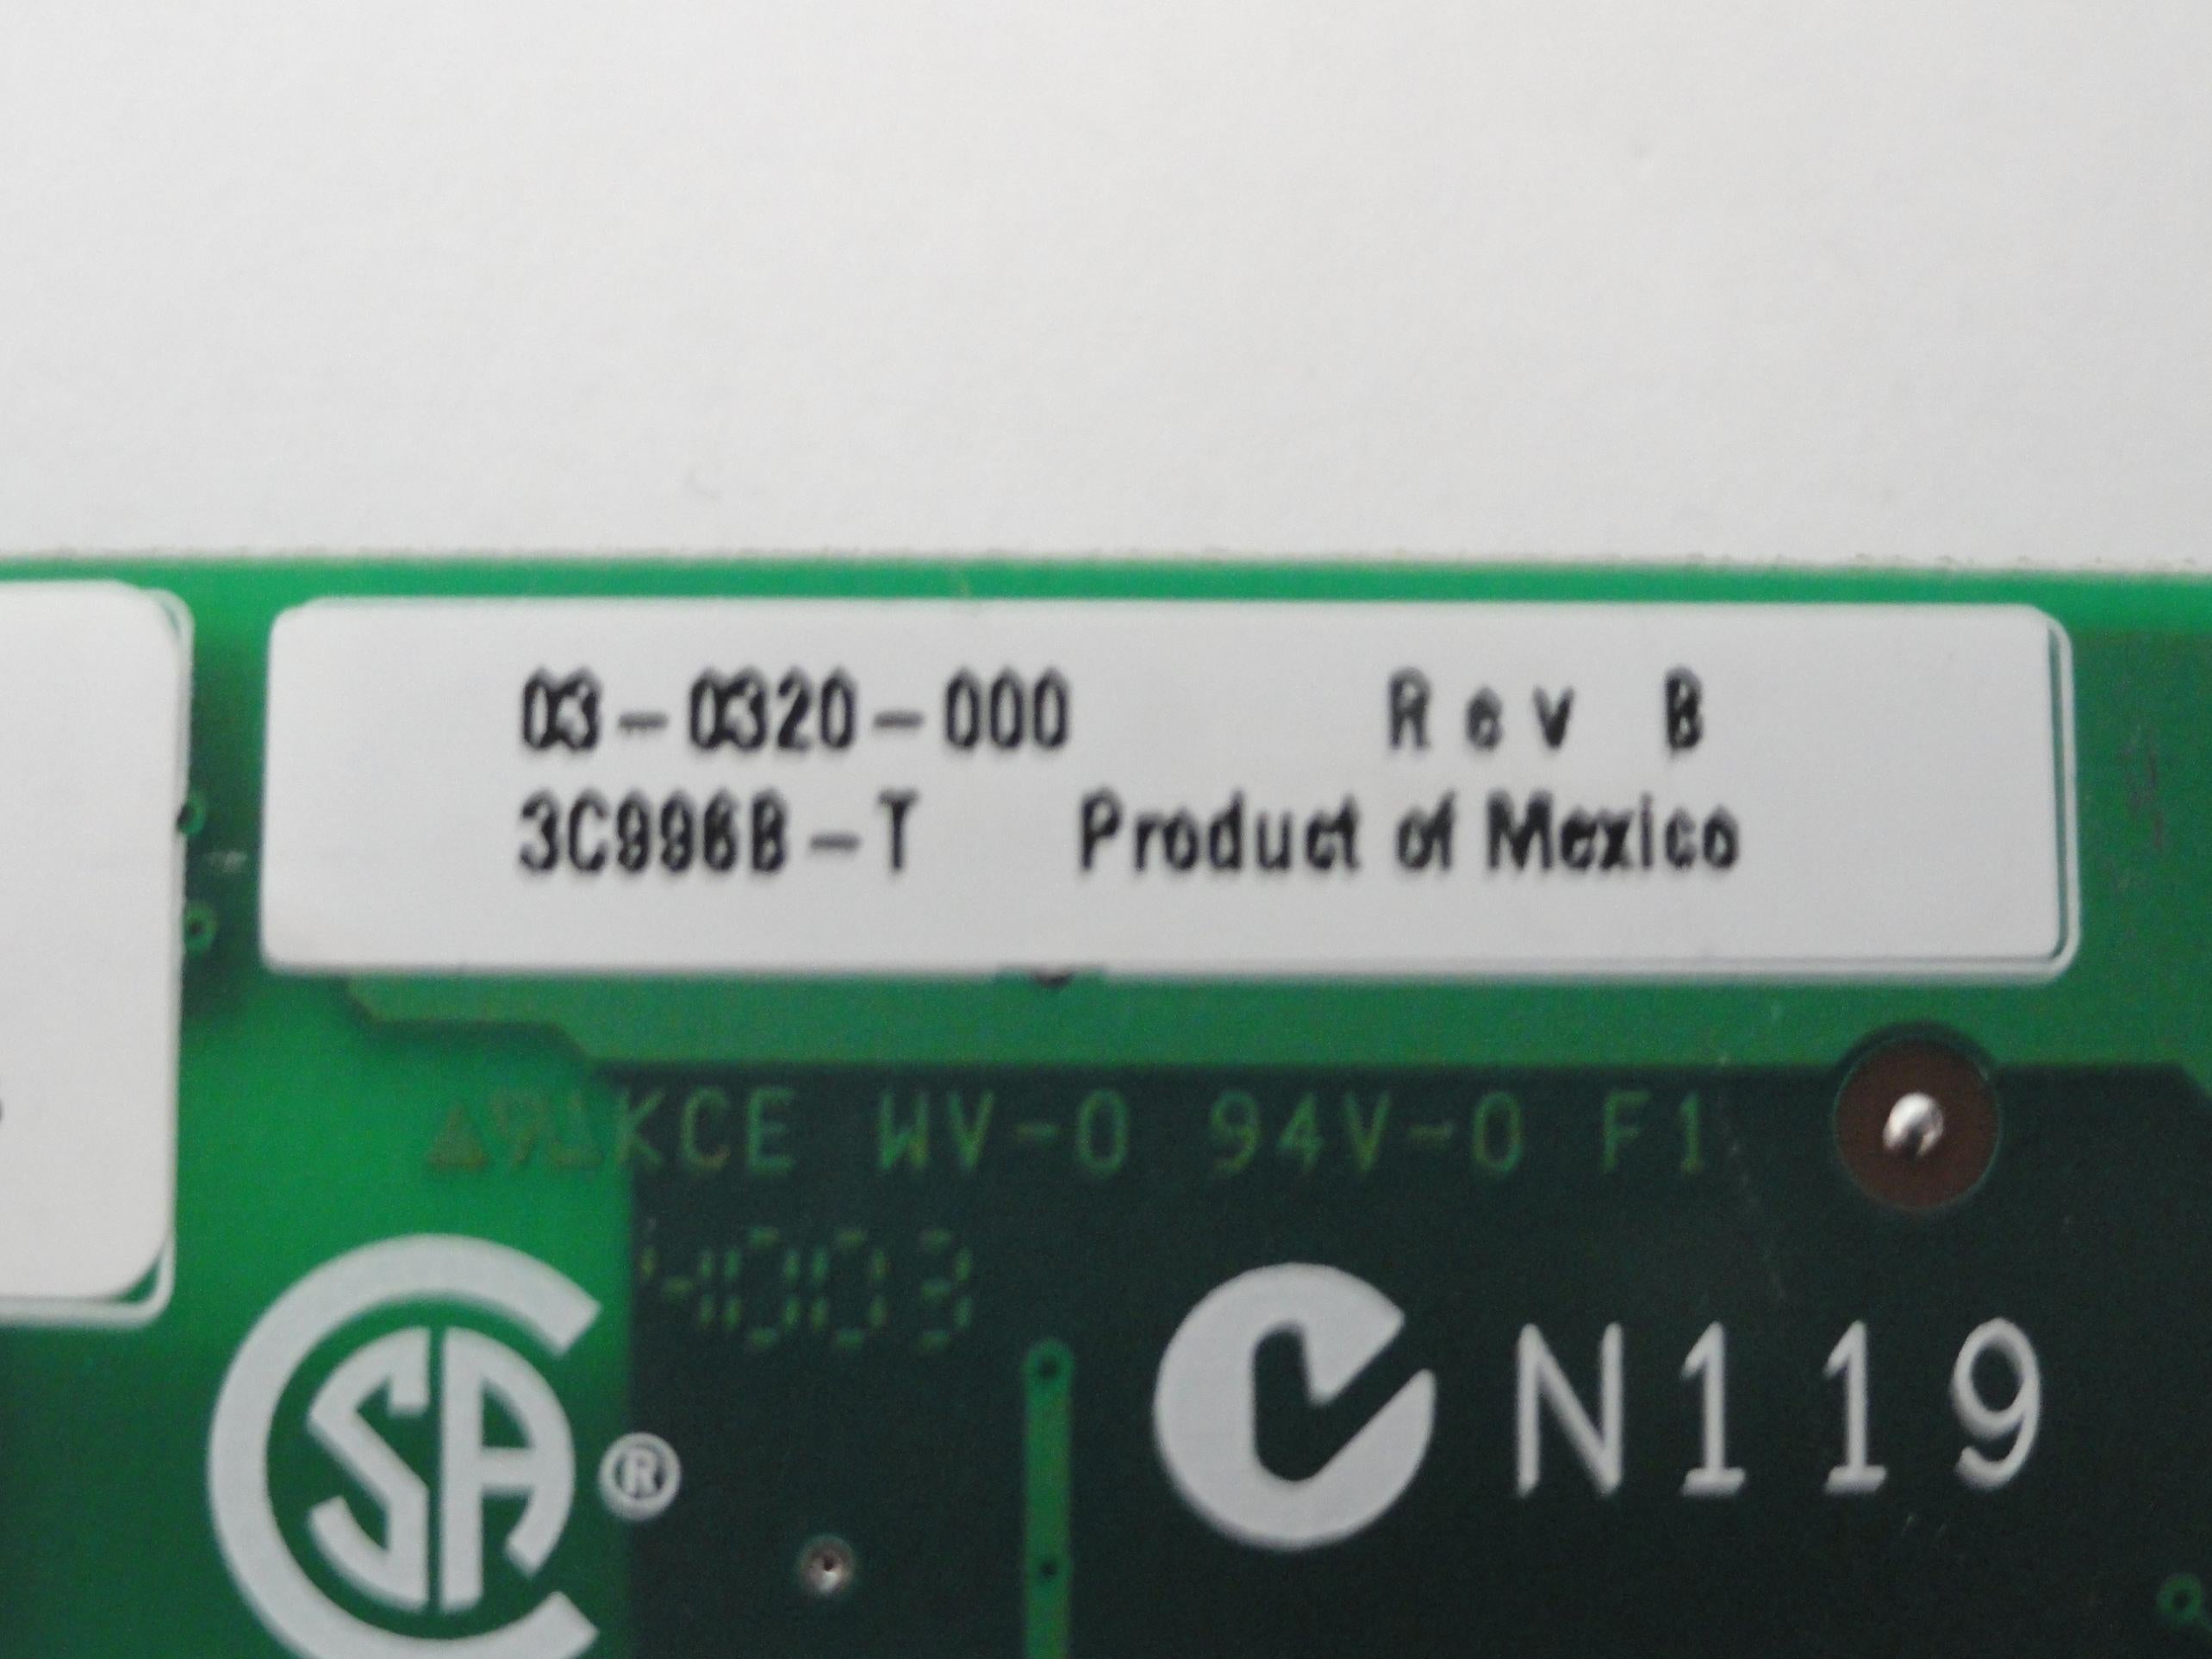 PR17055_03-0320-000_3Com HP PCI-133 Ethernet NIC - Image3